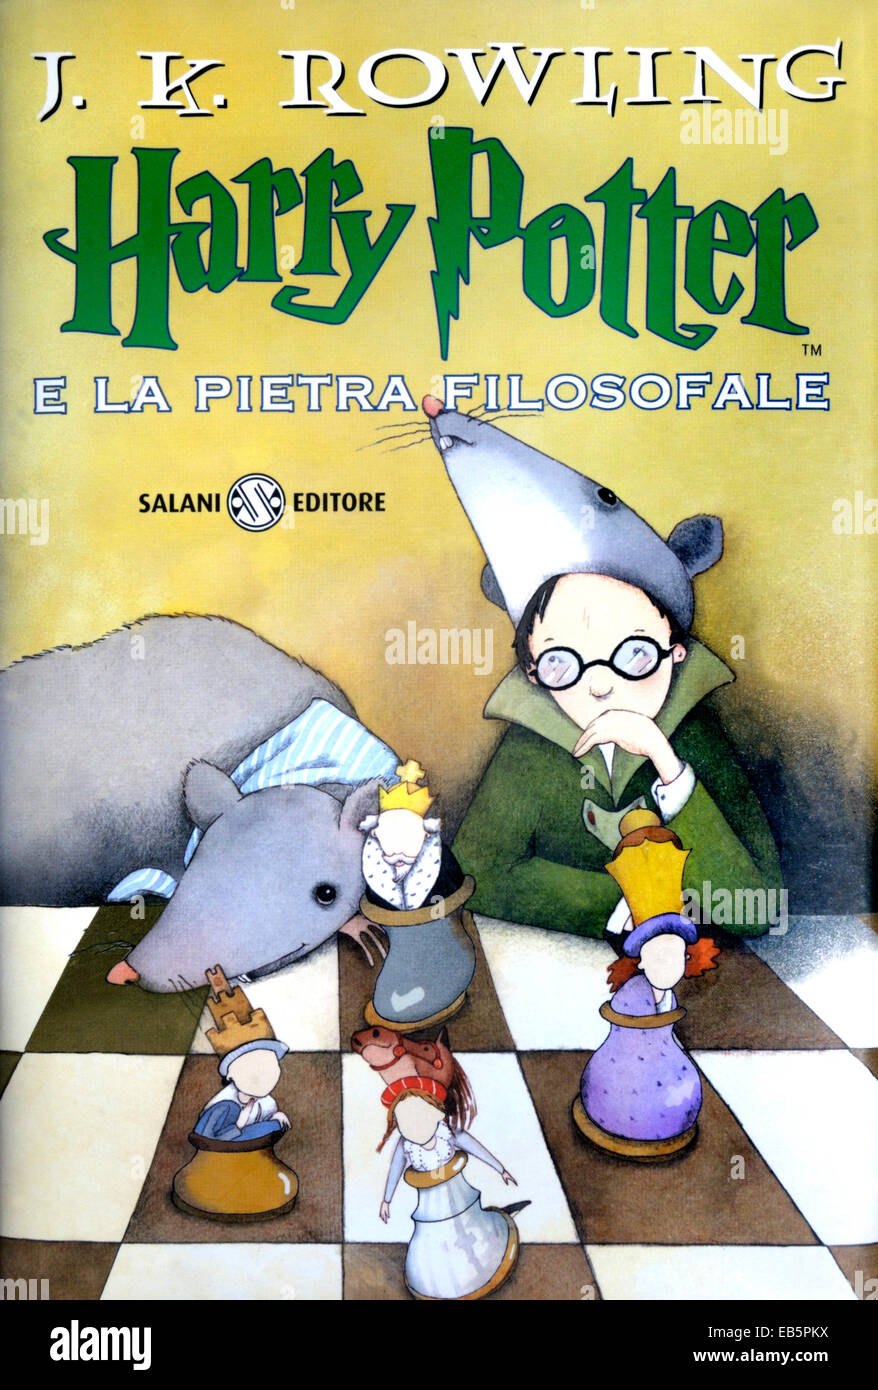 Harry Potter and the Philosopher's Stone - Italian edition Stock Photo